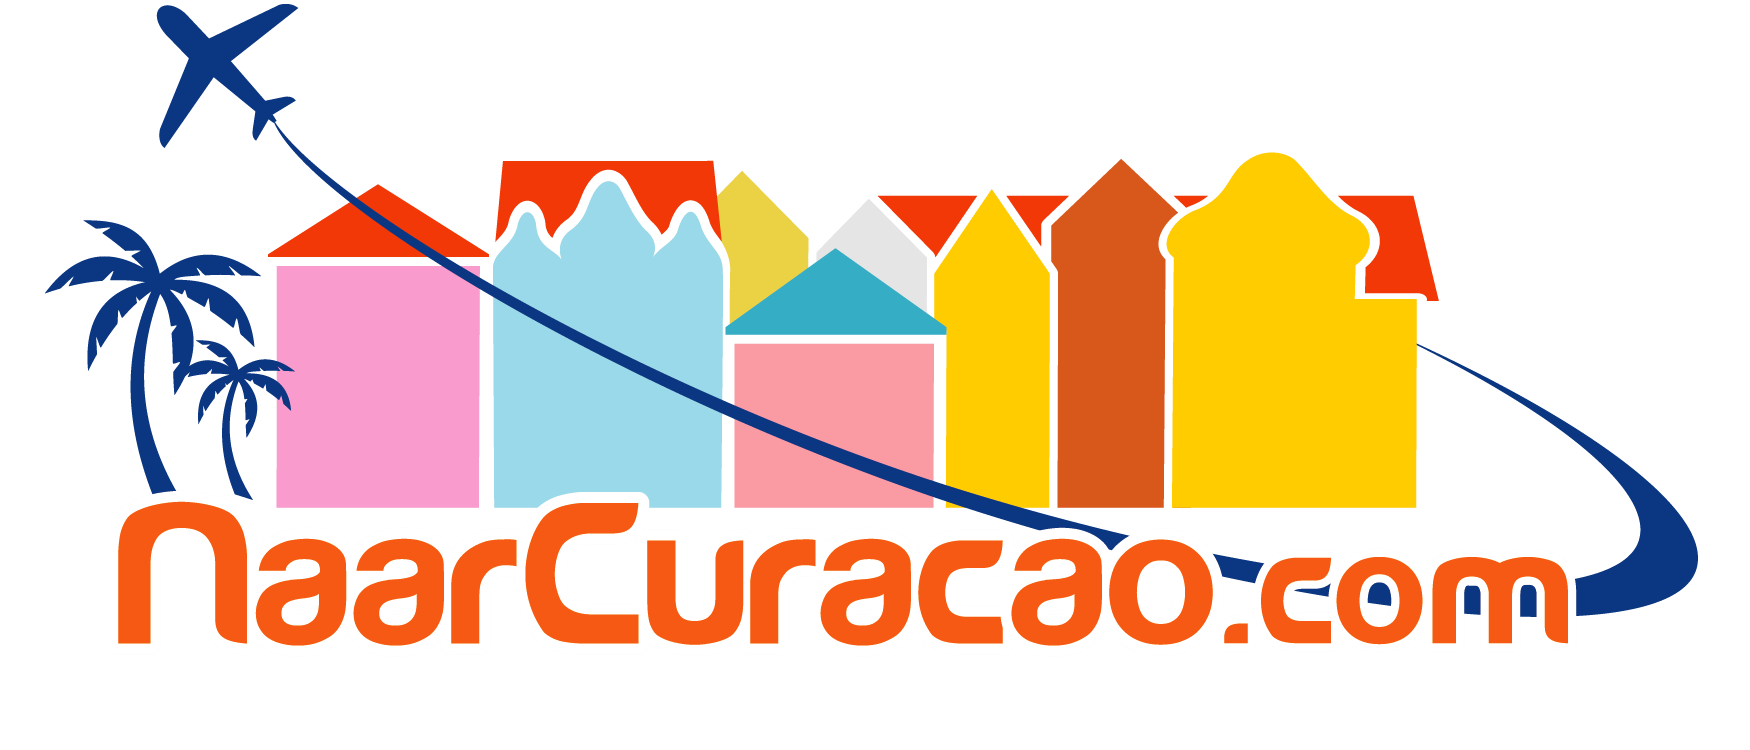 NaarCuracao logo 1750x750